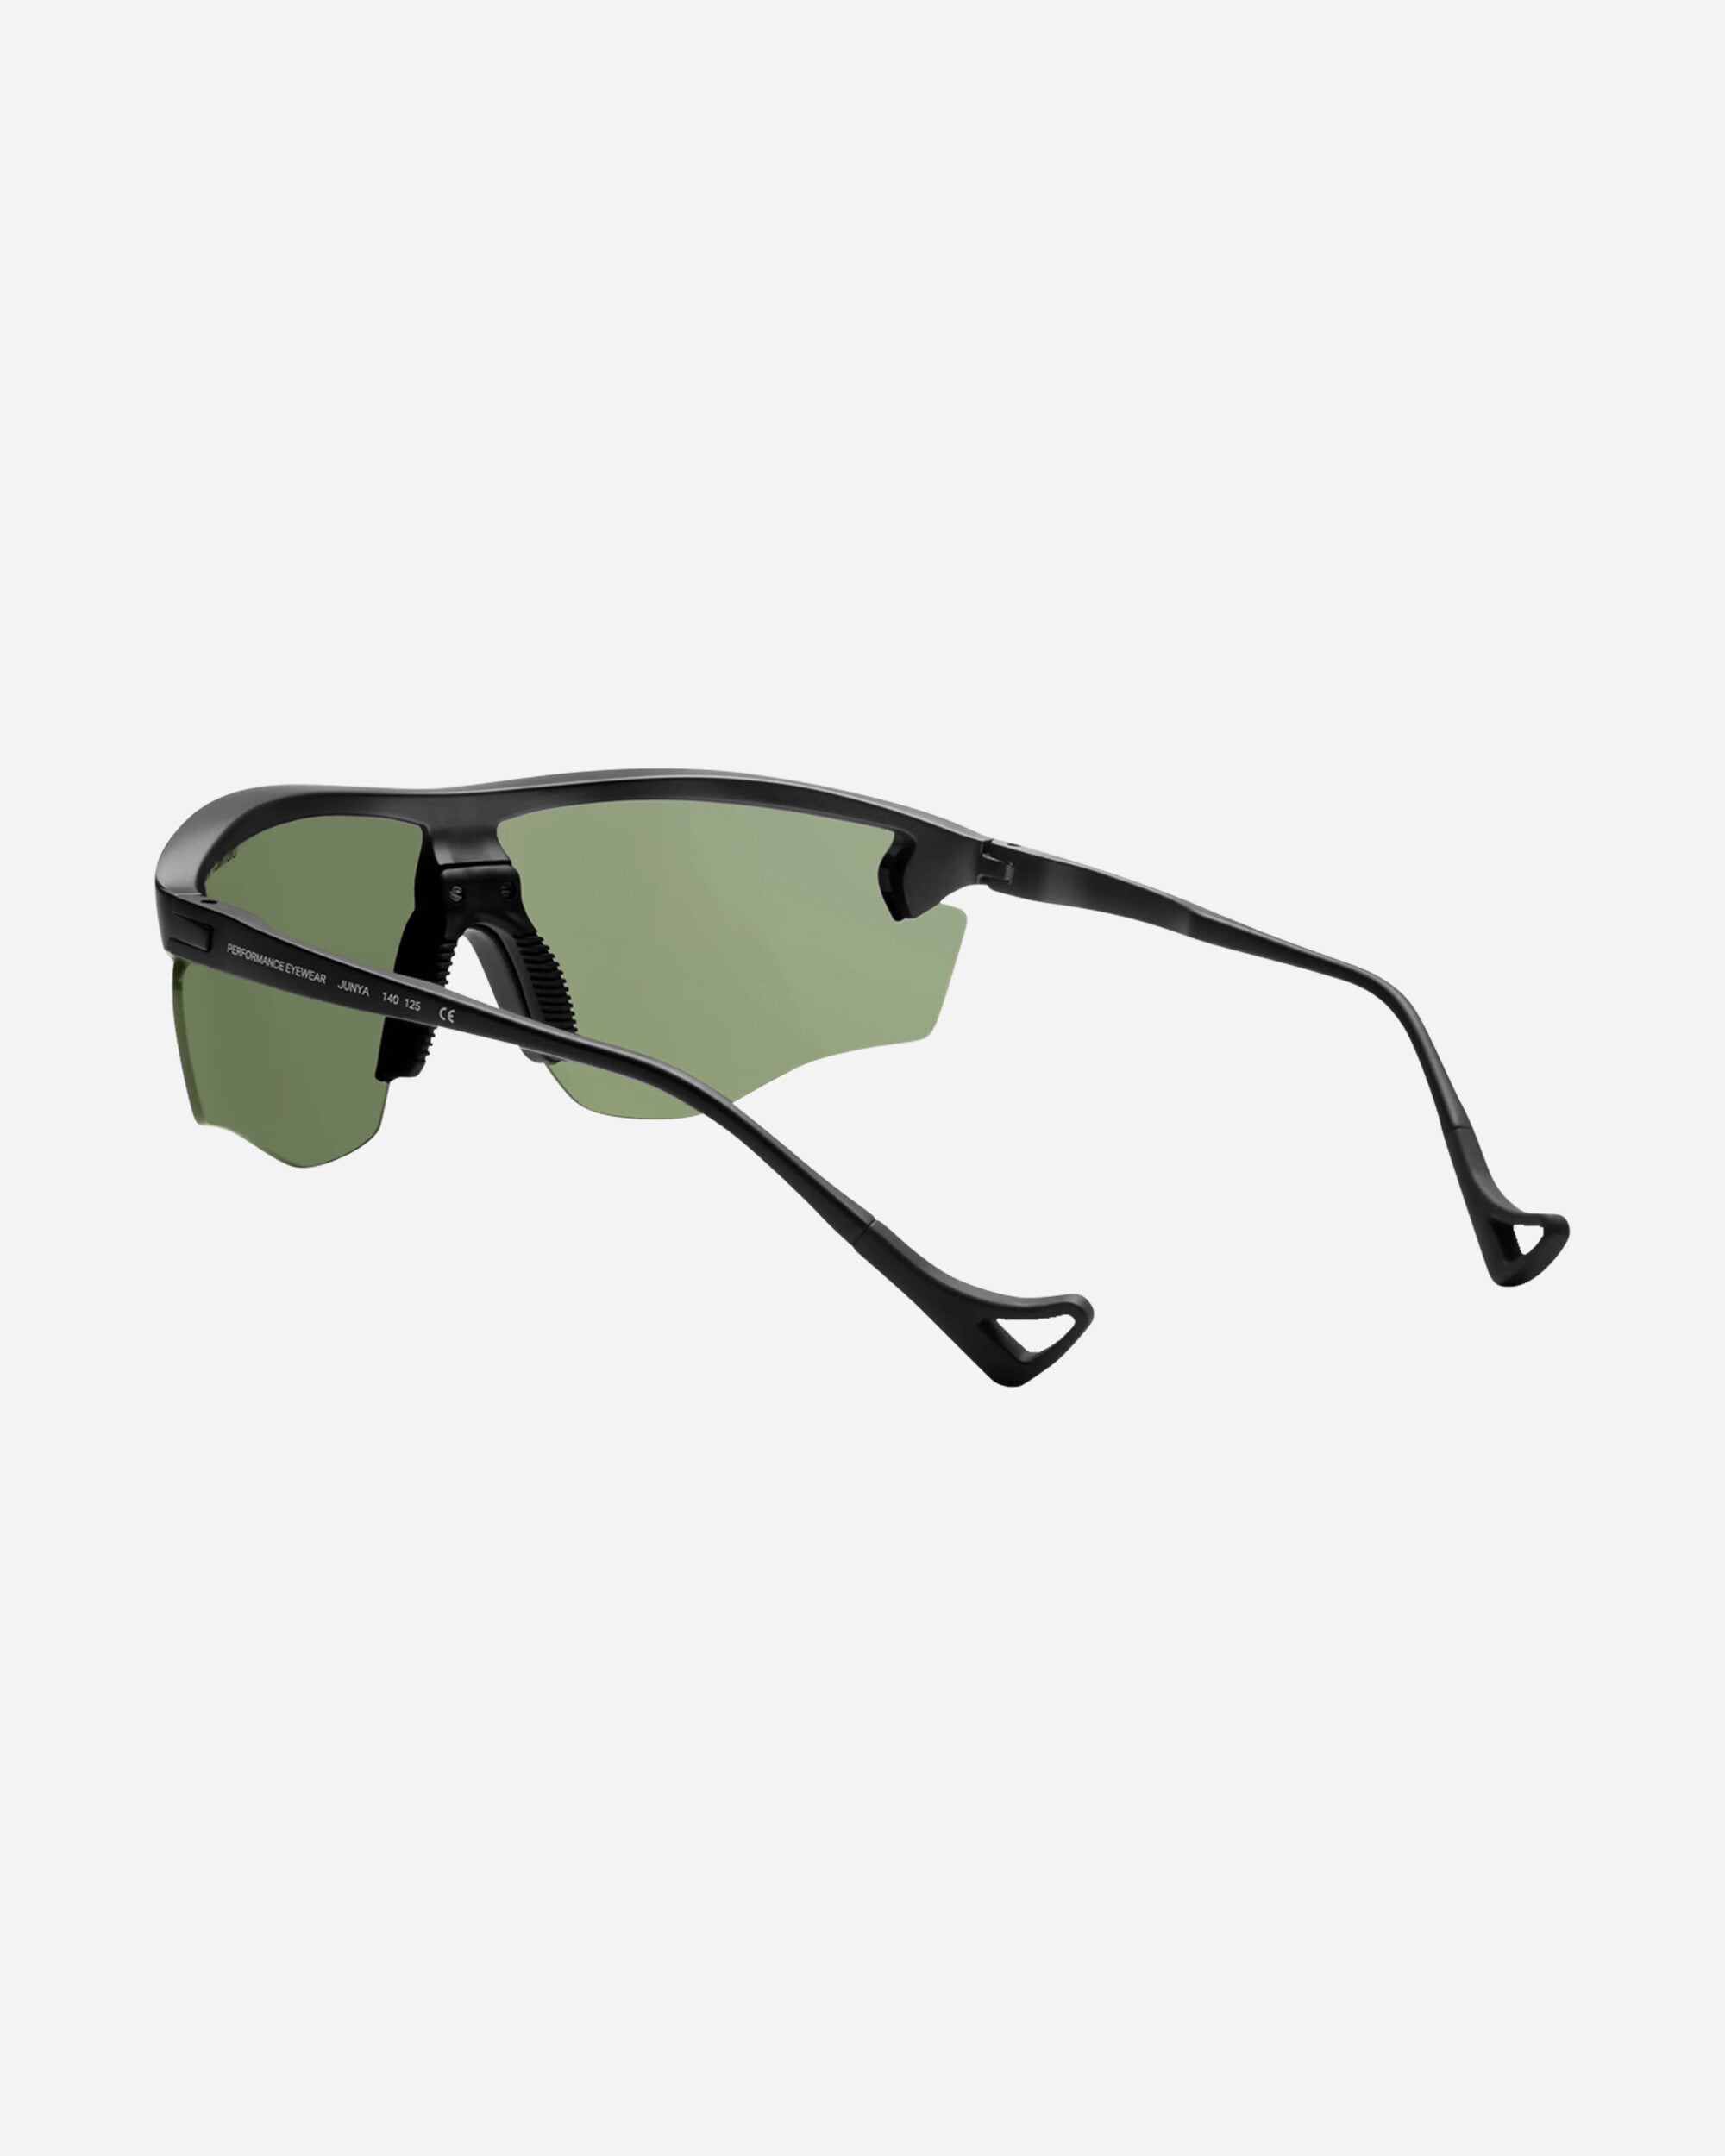 District Vision Junya Racer Black Eyewear Sunglasses DVG003 B